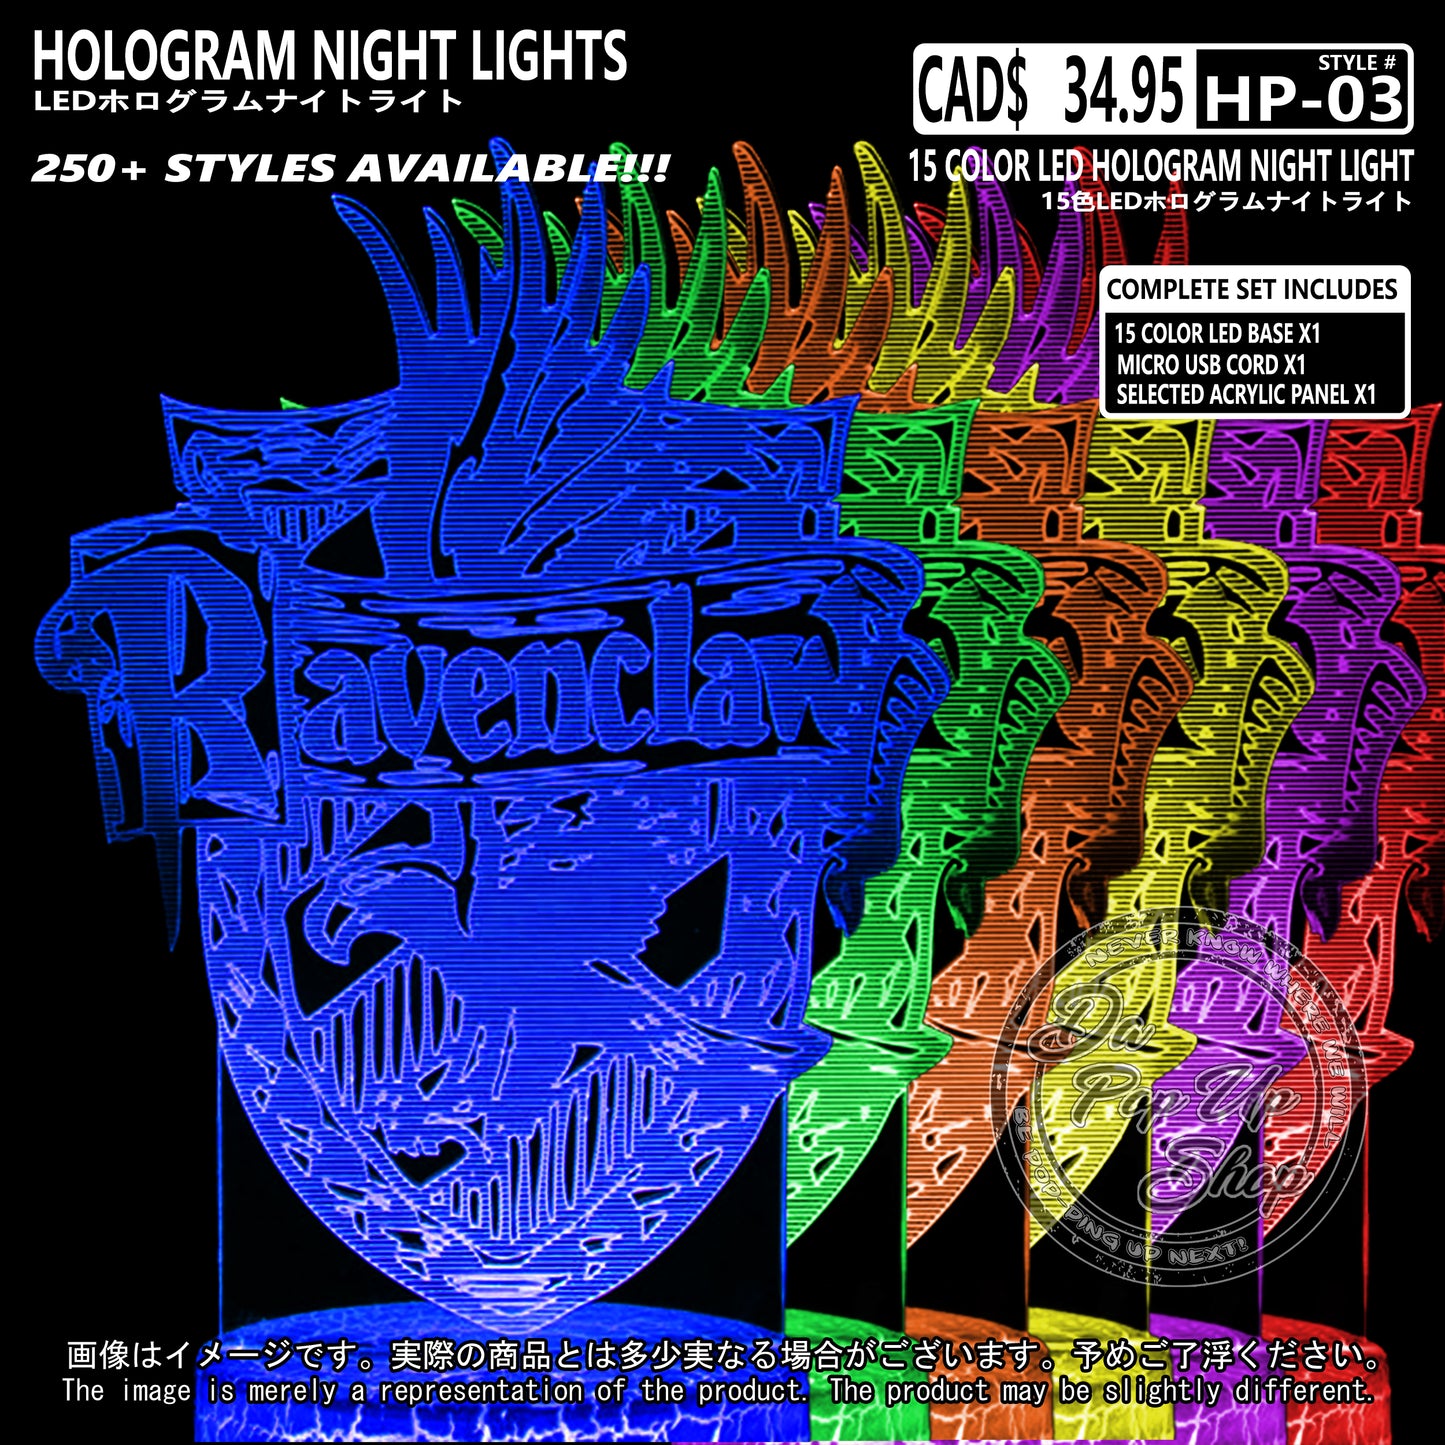 (HP-03) Harry Potter Hologram LED Night Light